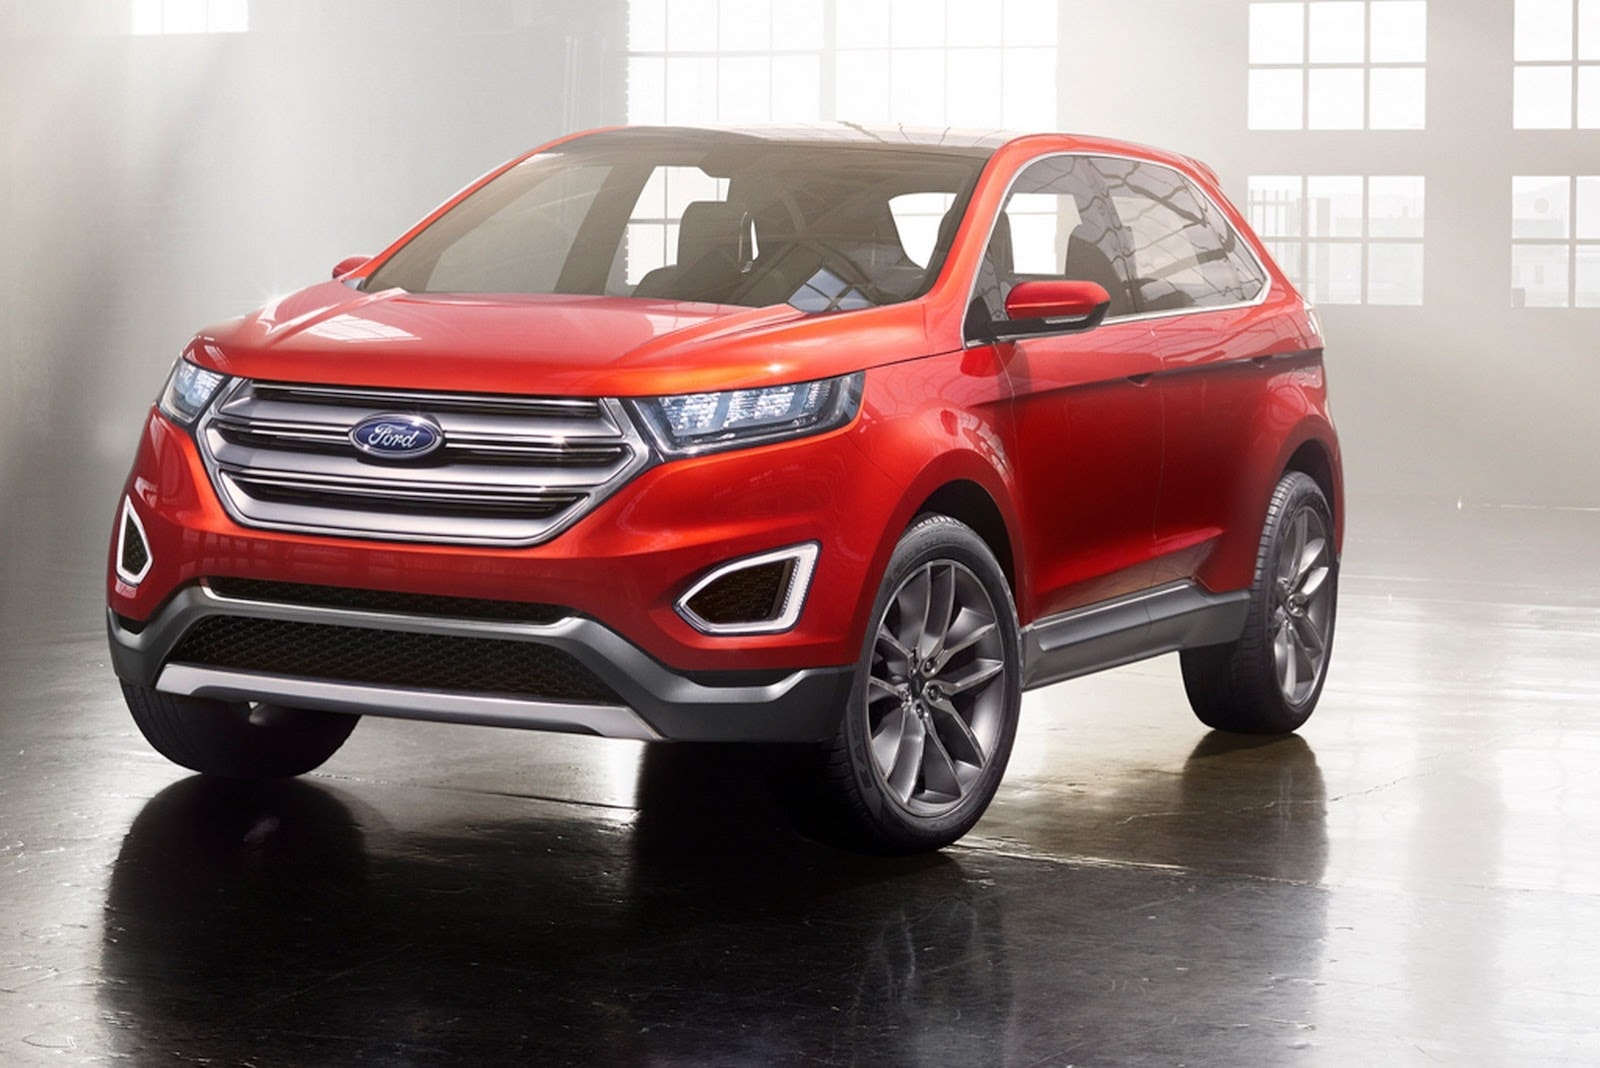 2015-ford-edge-concept-unveiled-photo-ga